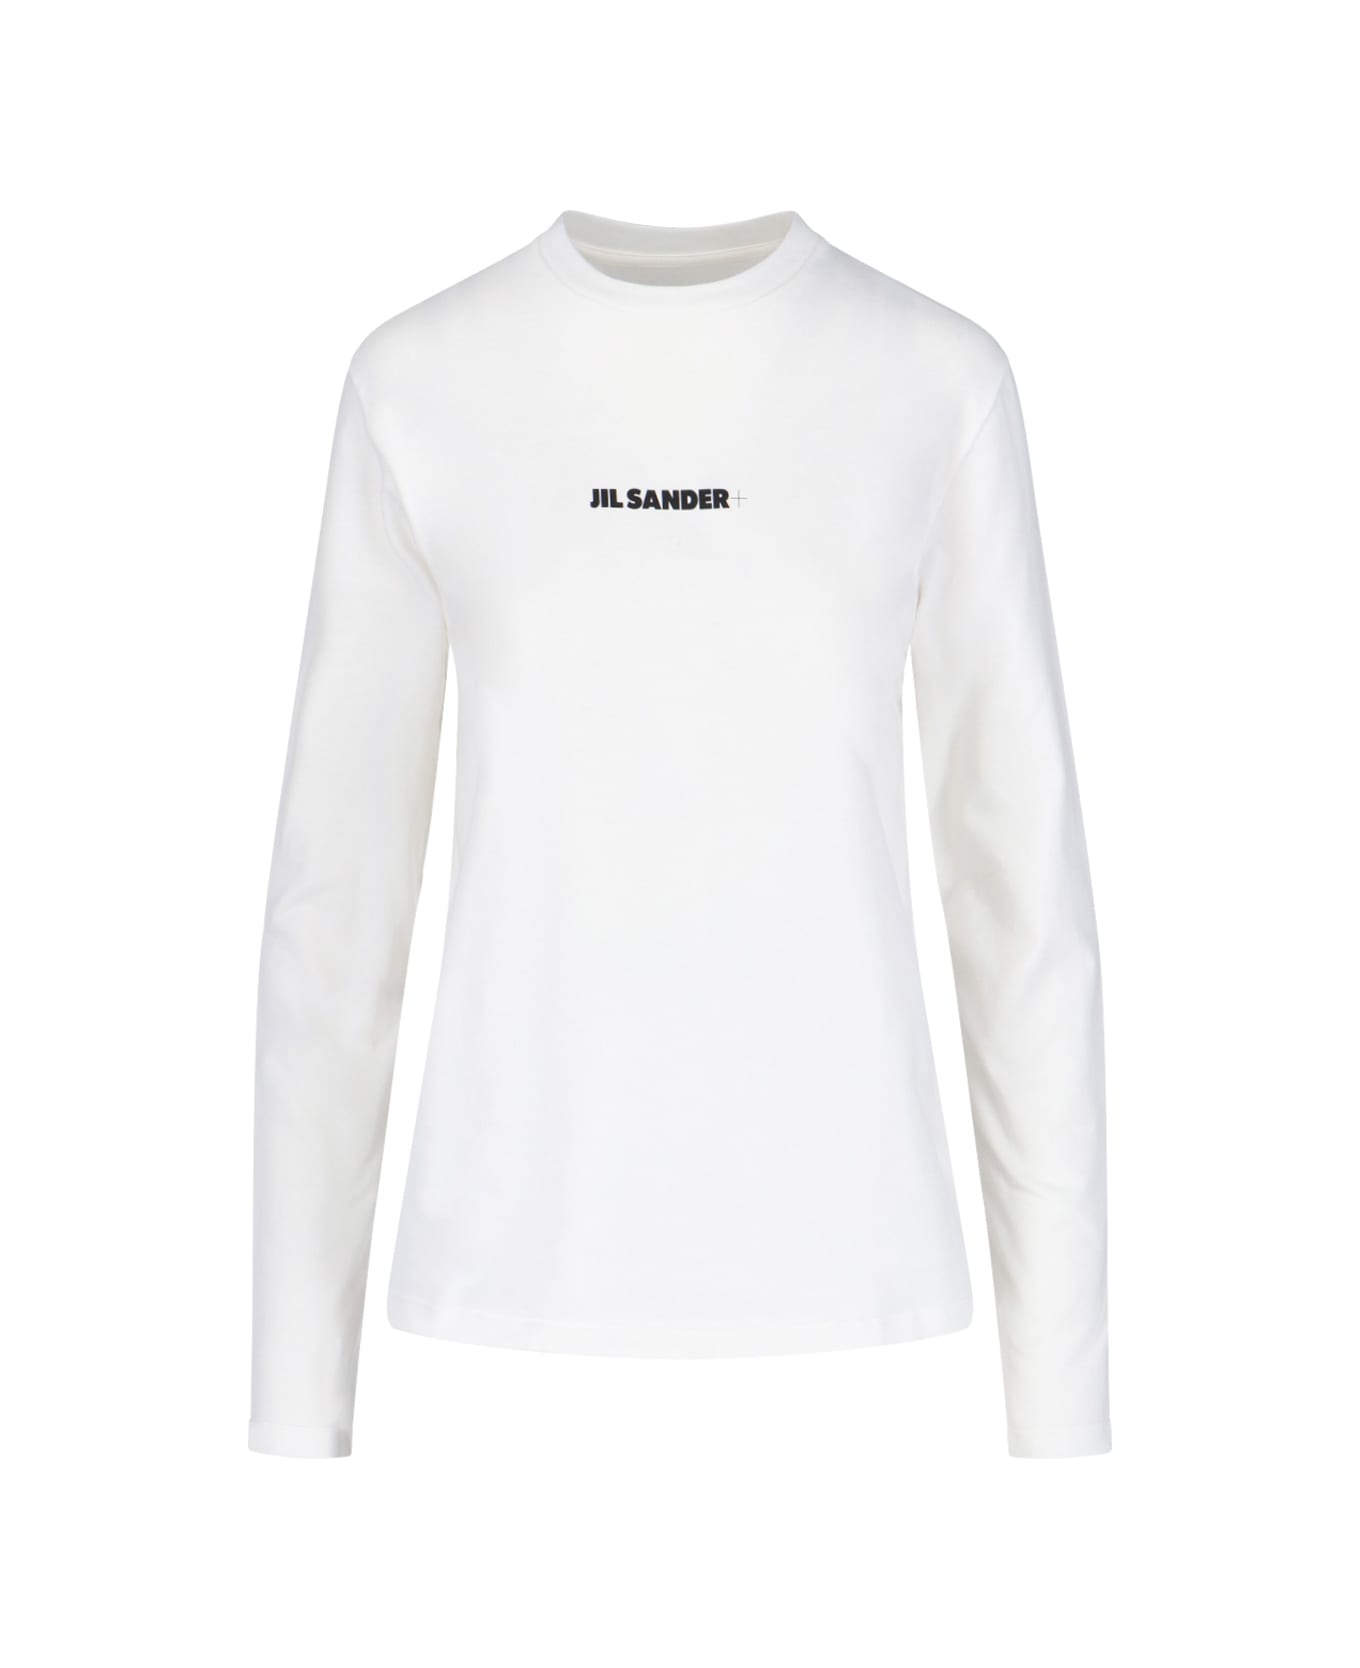 Jil Sander Logo Sweater - White